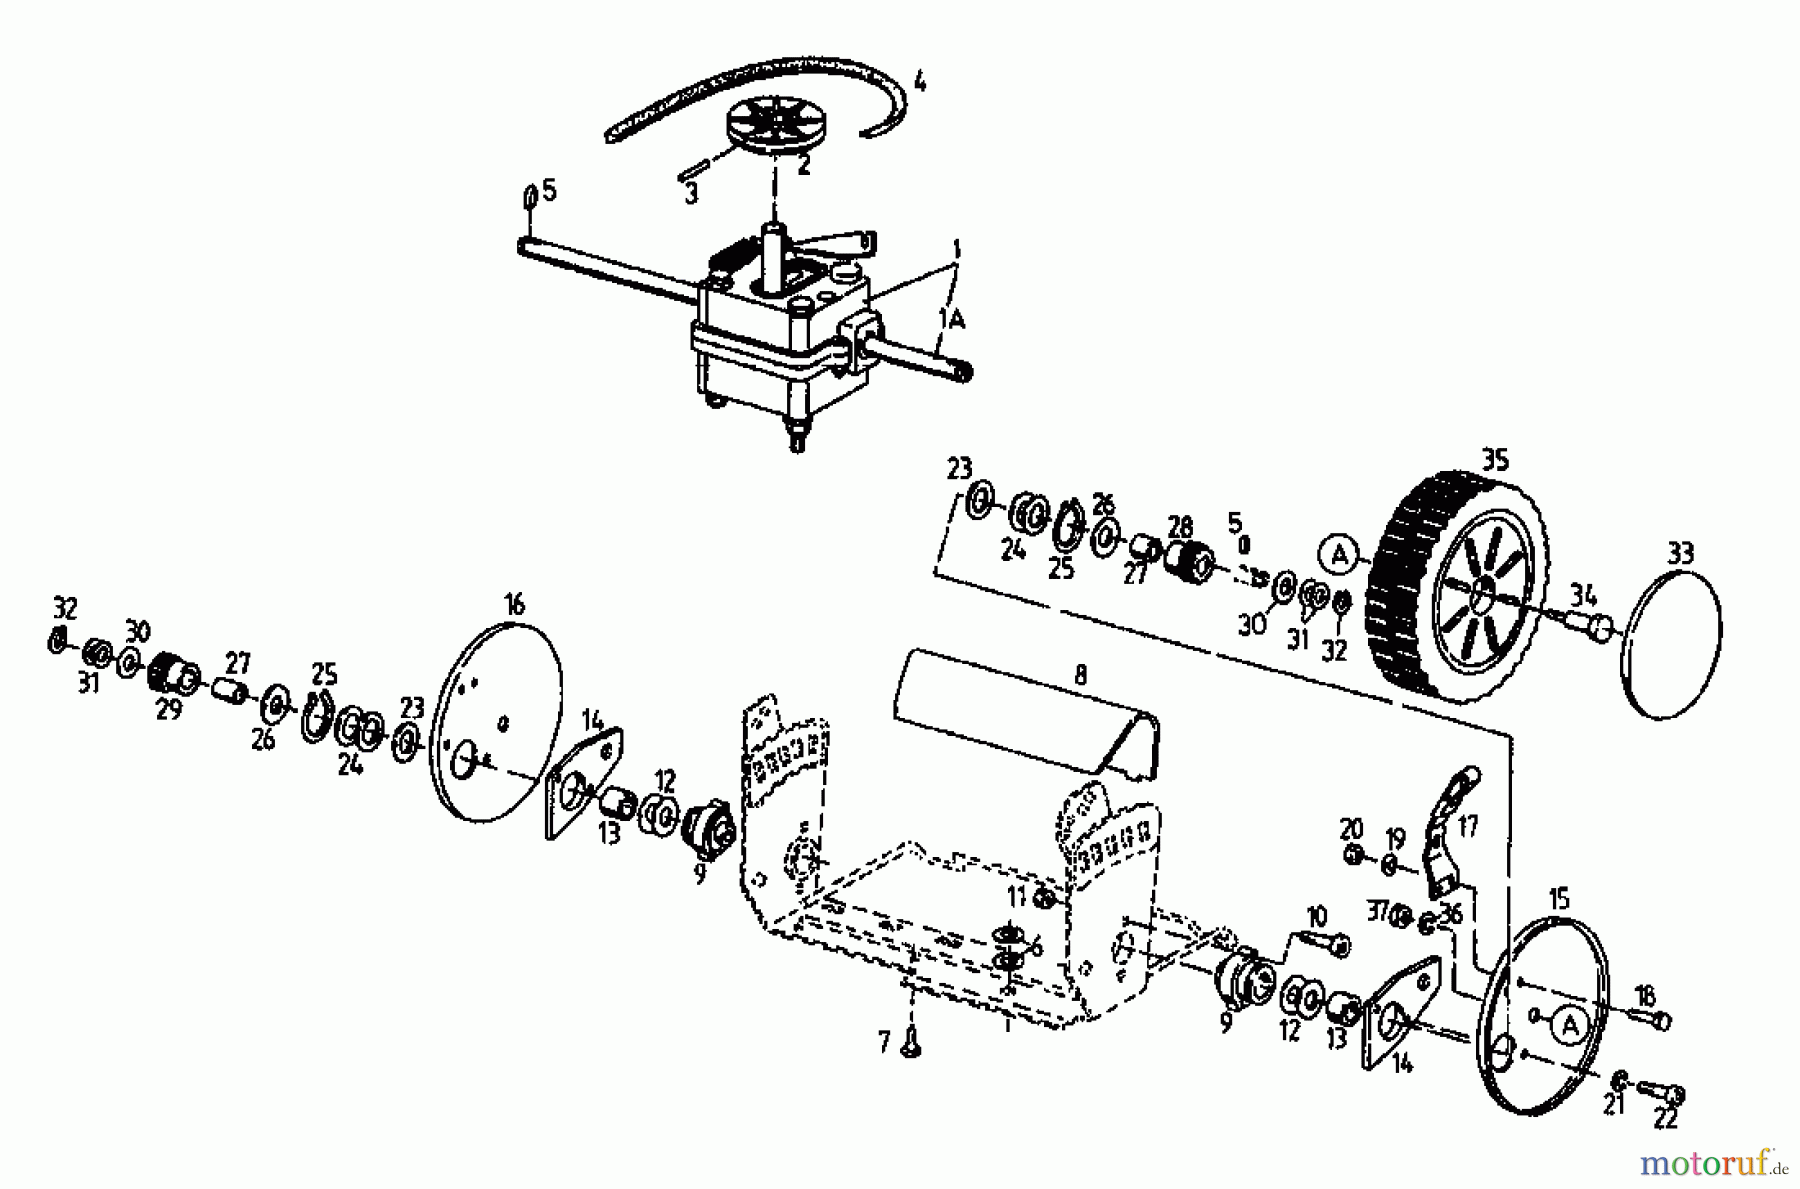  Floraself Petrol mower self propelled 3746 BLRE 04061.01  (1996) Gearbox, Wheels, Cutting hight adjustment